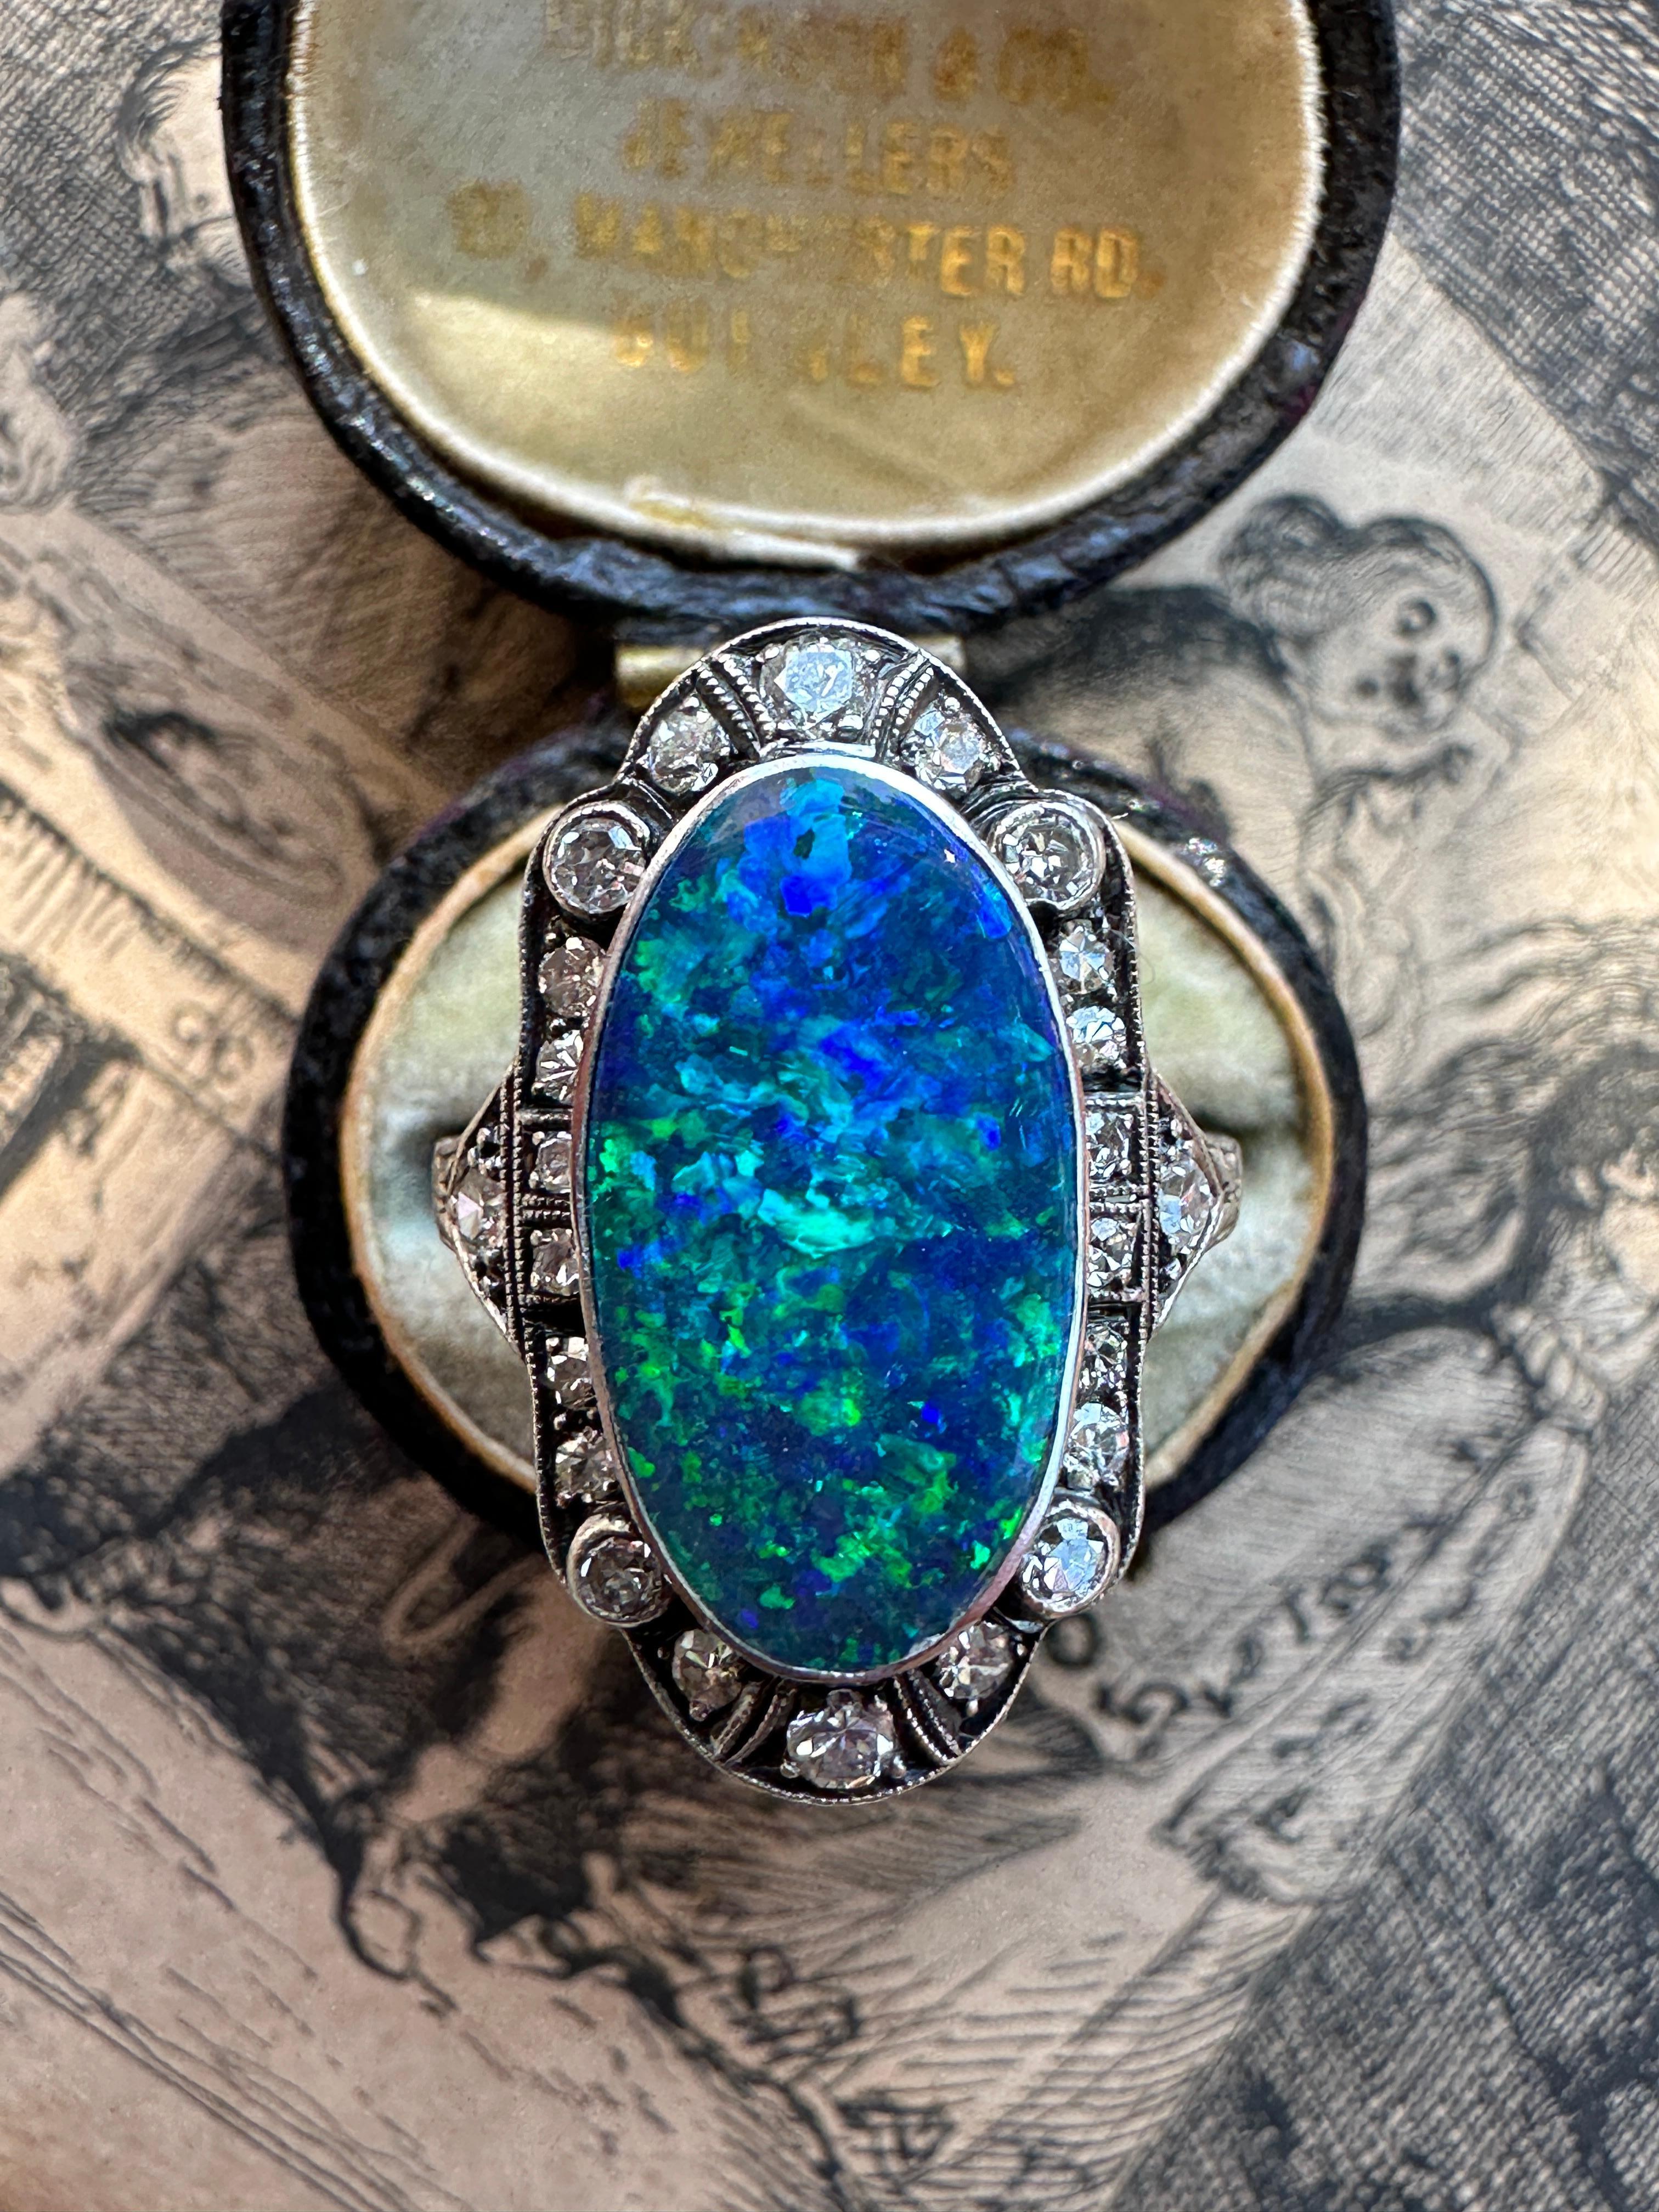 Women's Art Deco Black Opal and Diamond Ring